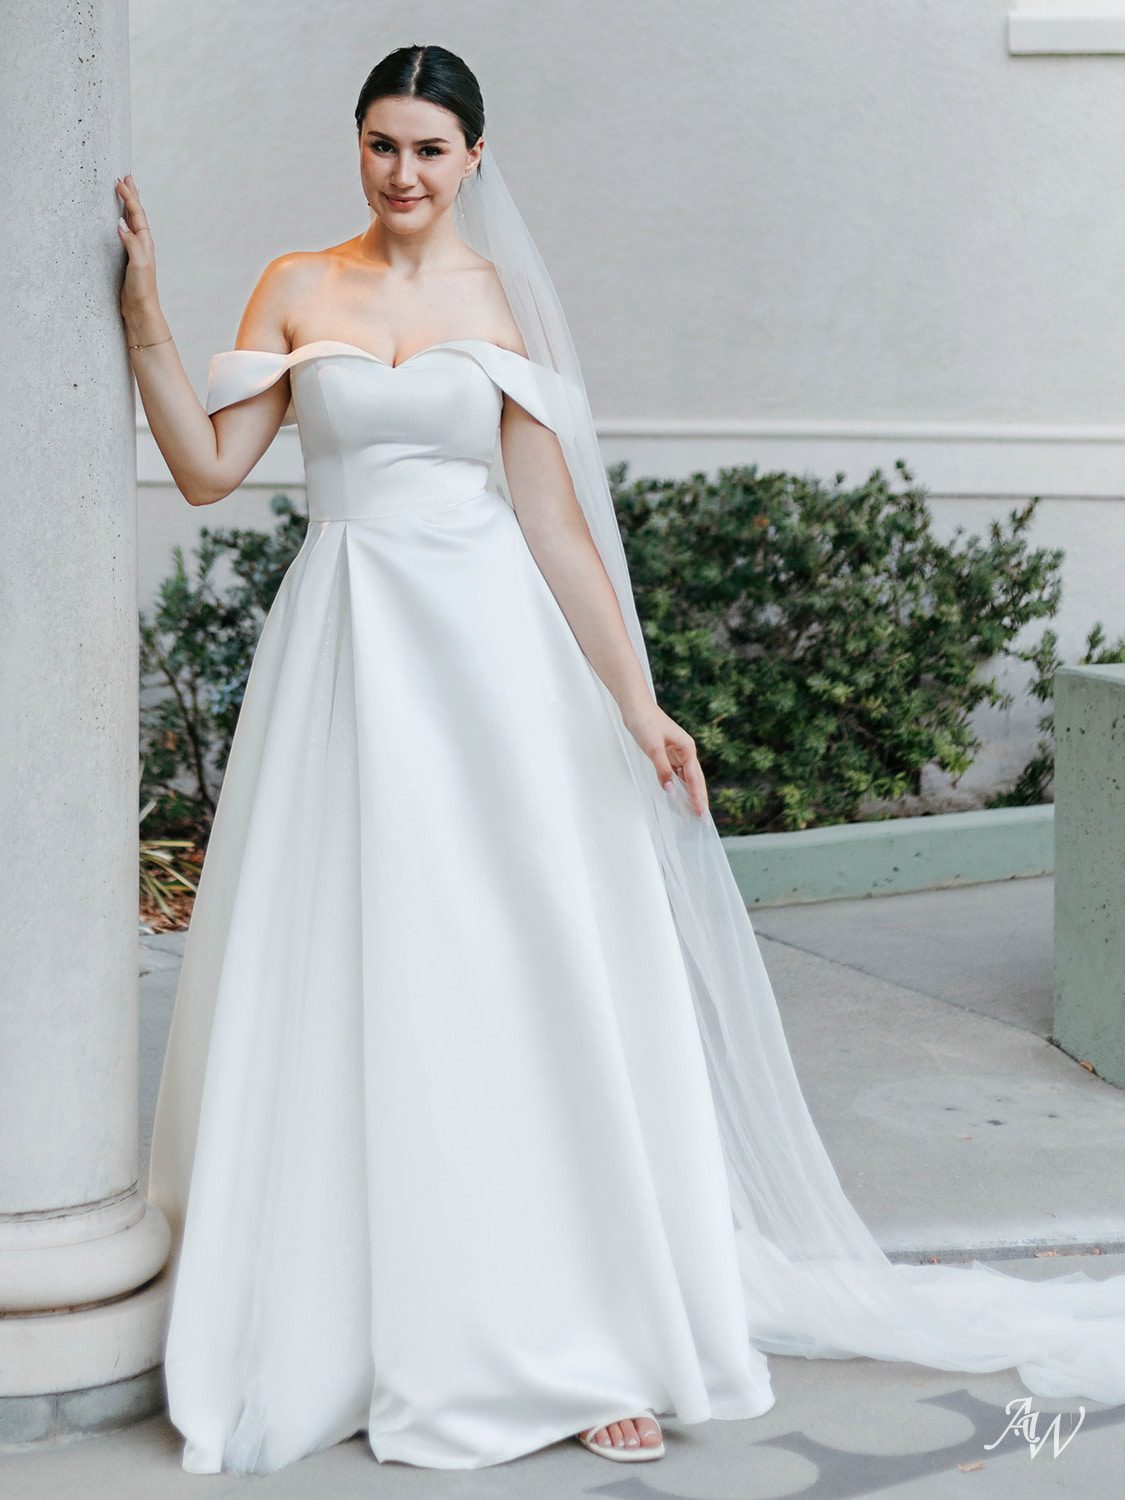 Wedding Dress with Veil 2023 Trend